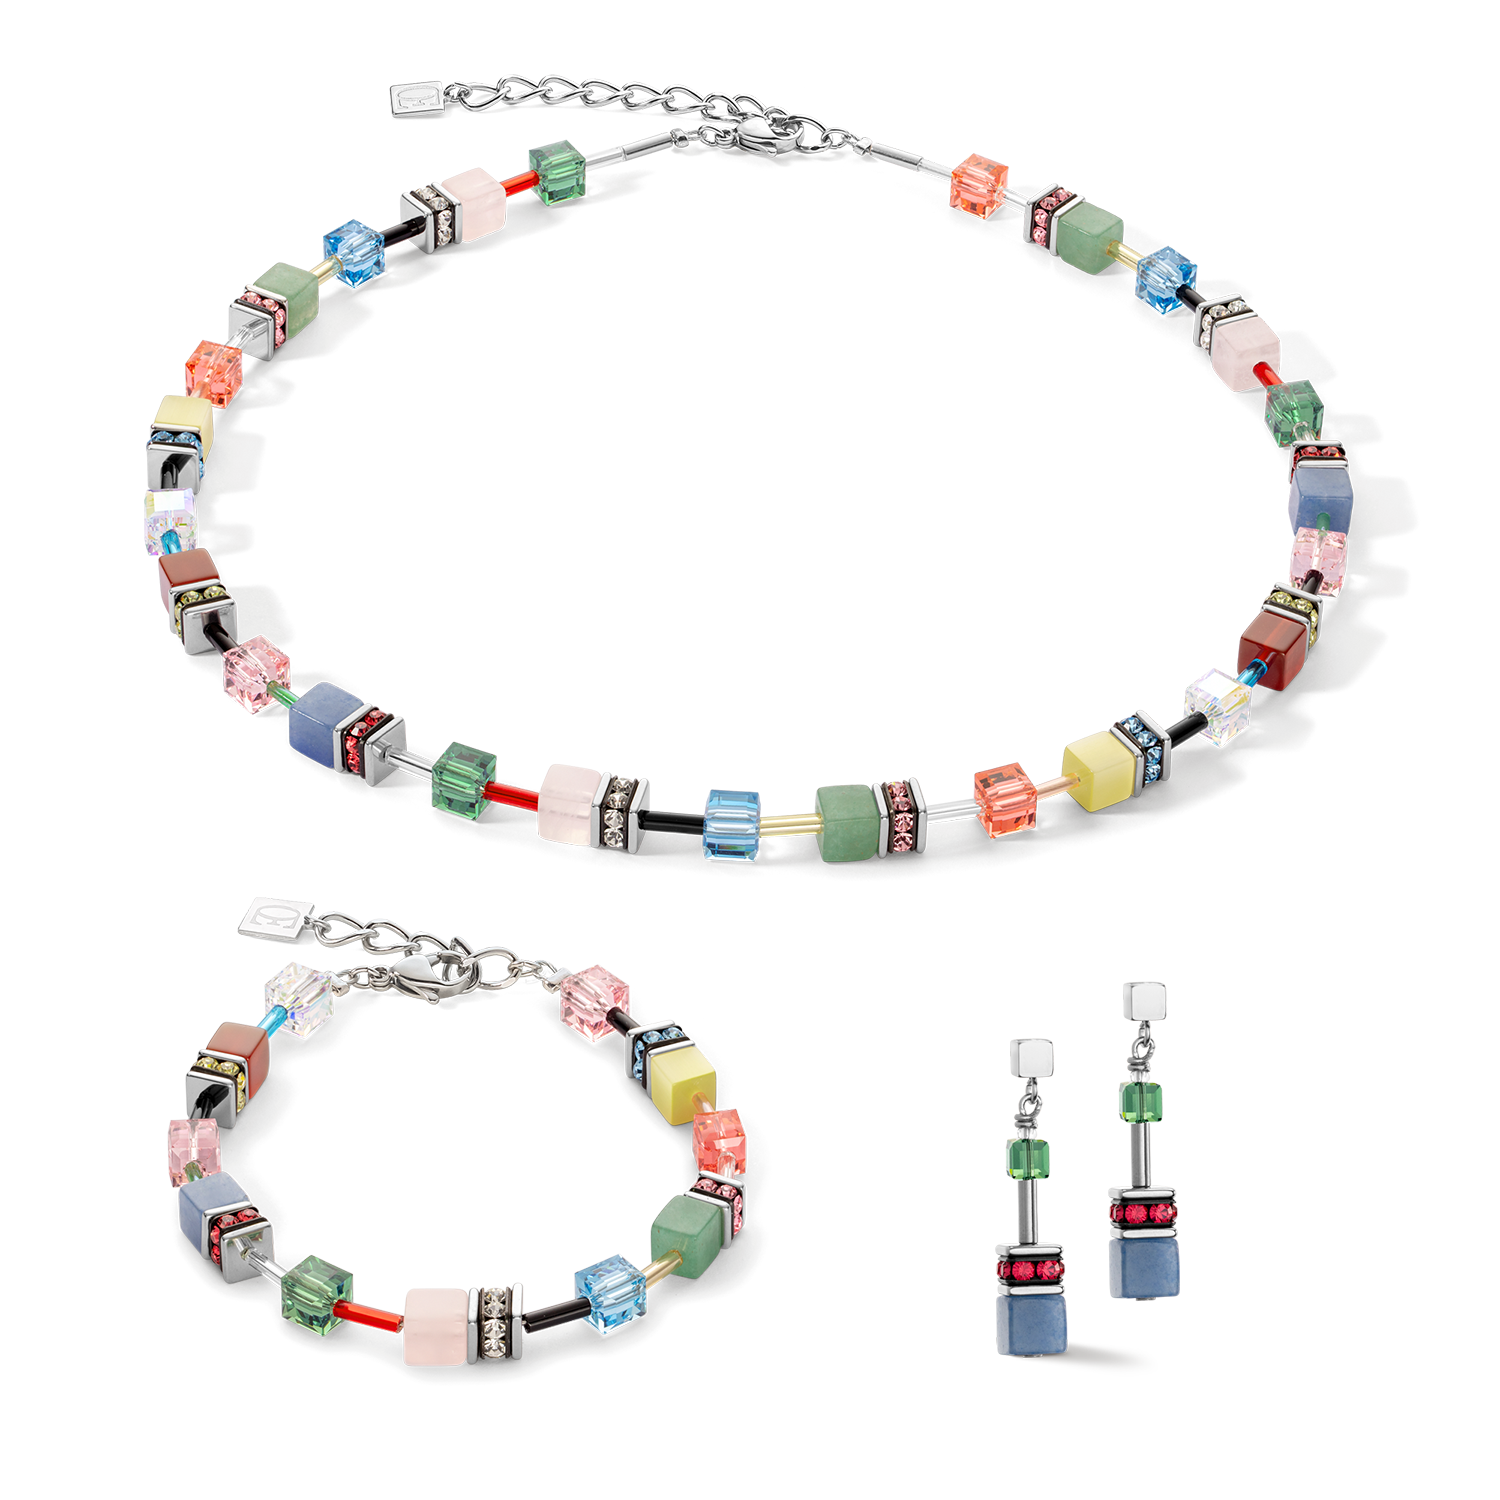 GeoCUBE® Iconic Precious bracelet Multicolour Delight